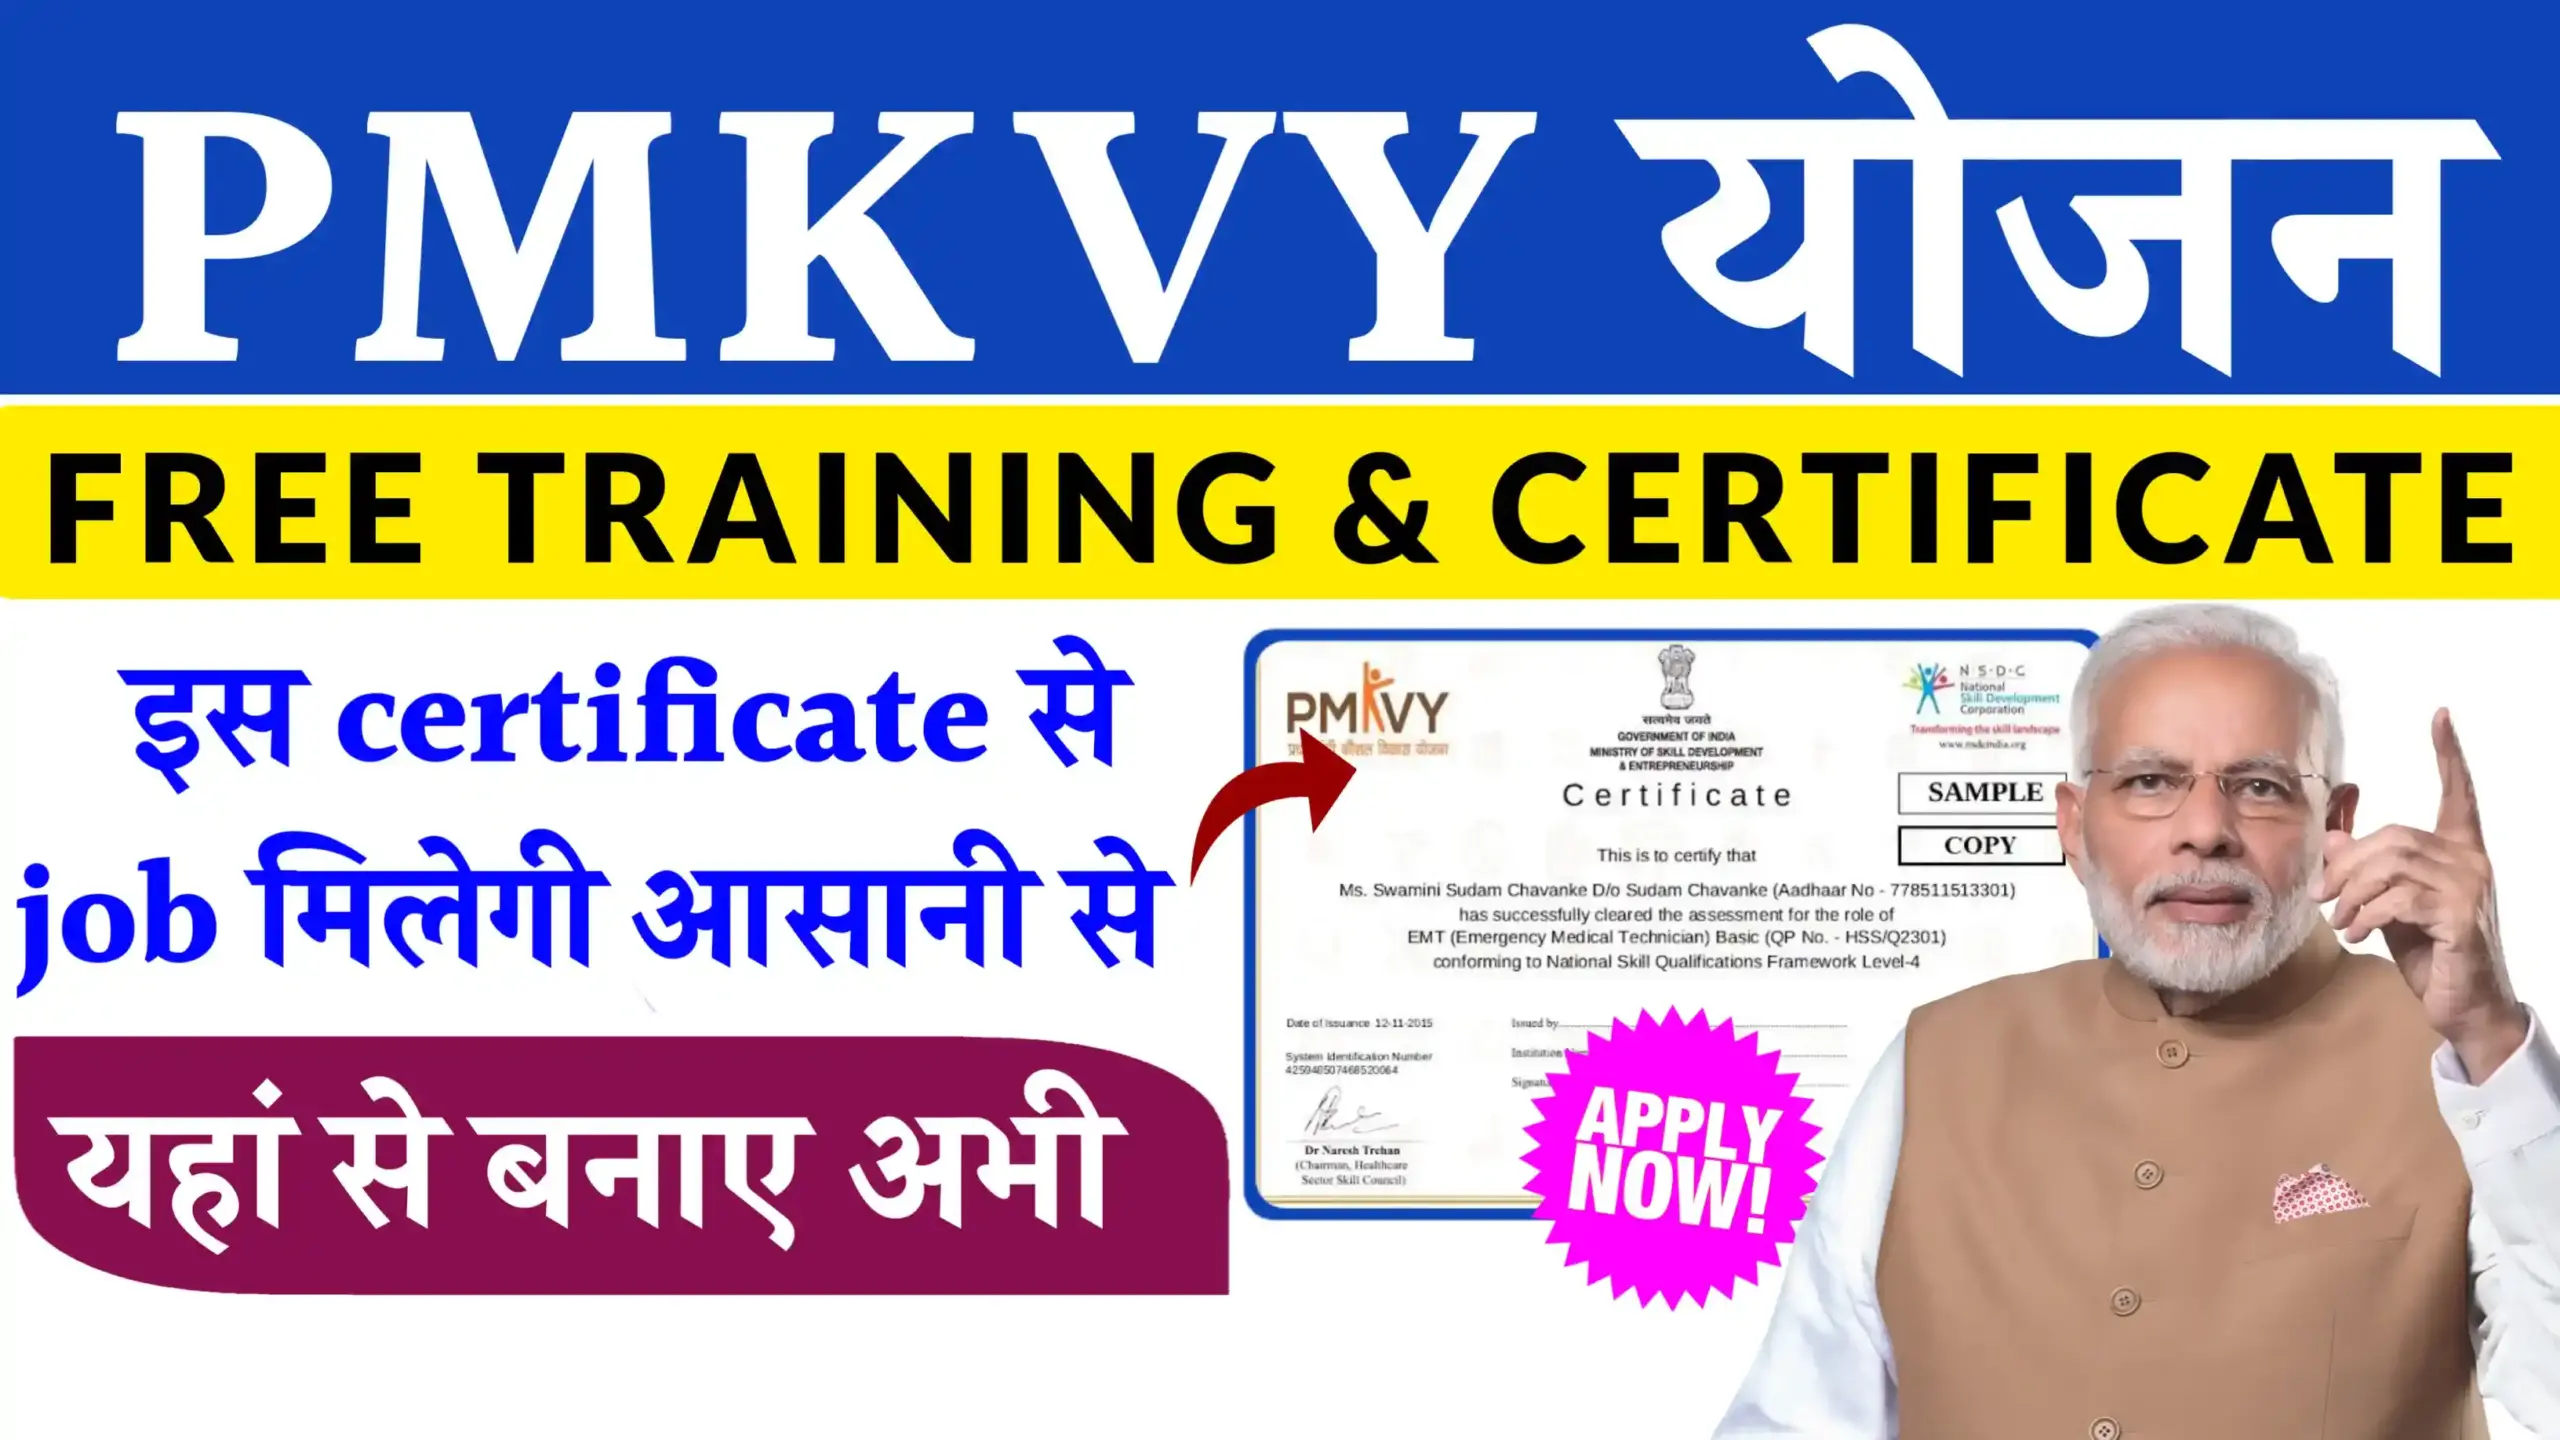 PMKVY Free Training & Certificate